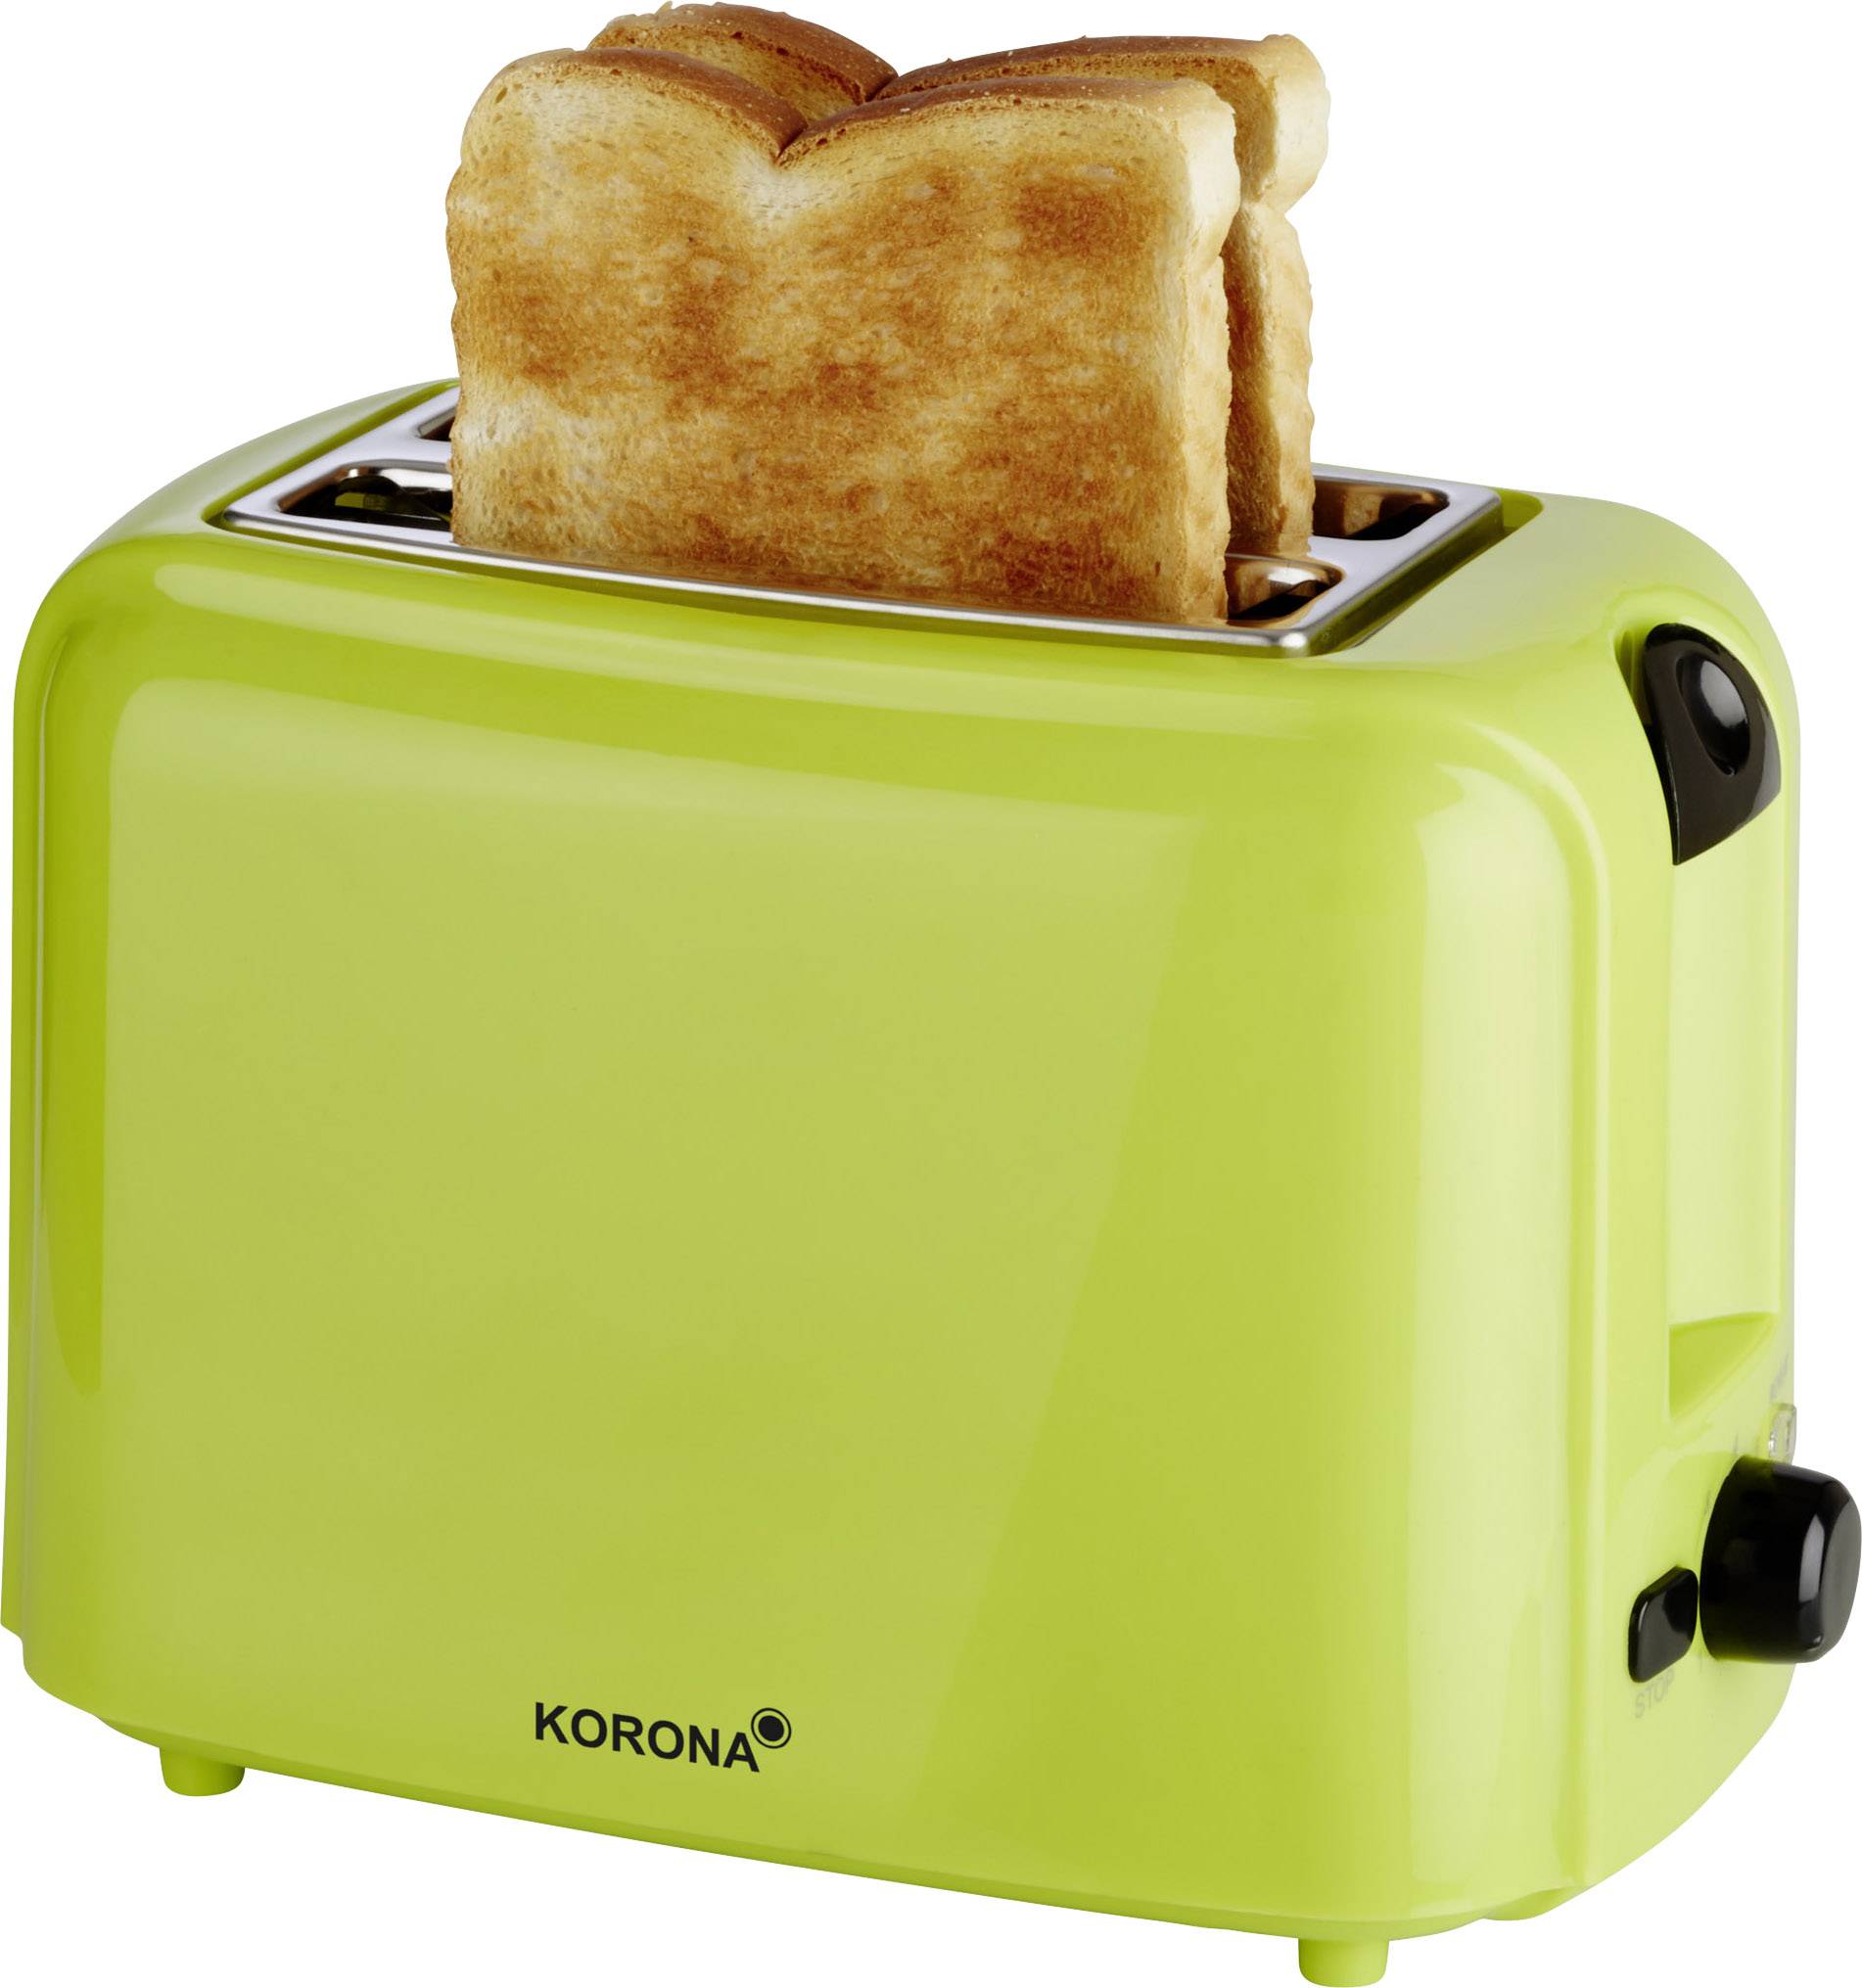 Unite taste garbage Korona 21033 Toaster with home baking attachment Green | Conrad.com